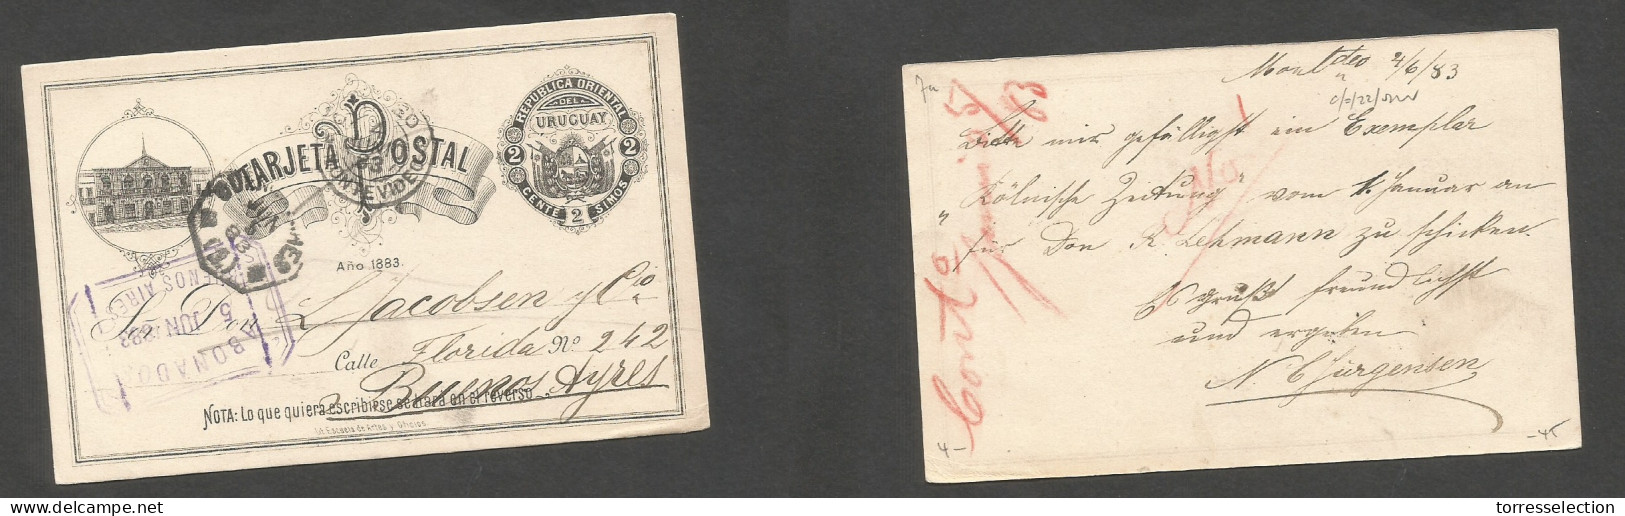 URUGUAY. 1883 (4 June) Mont - Argentina, Buenos Aires (5 June) 2c Black Early Overseas Illustr Stat Card. VF. - Uruguay